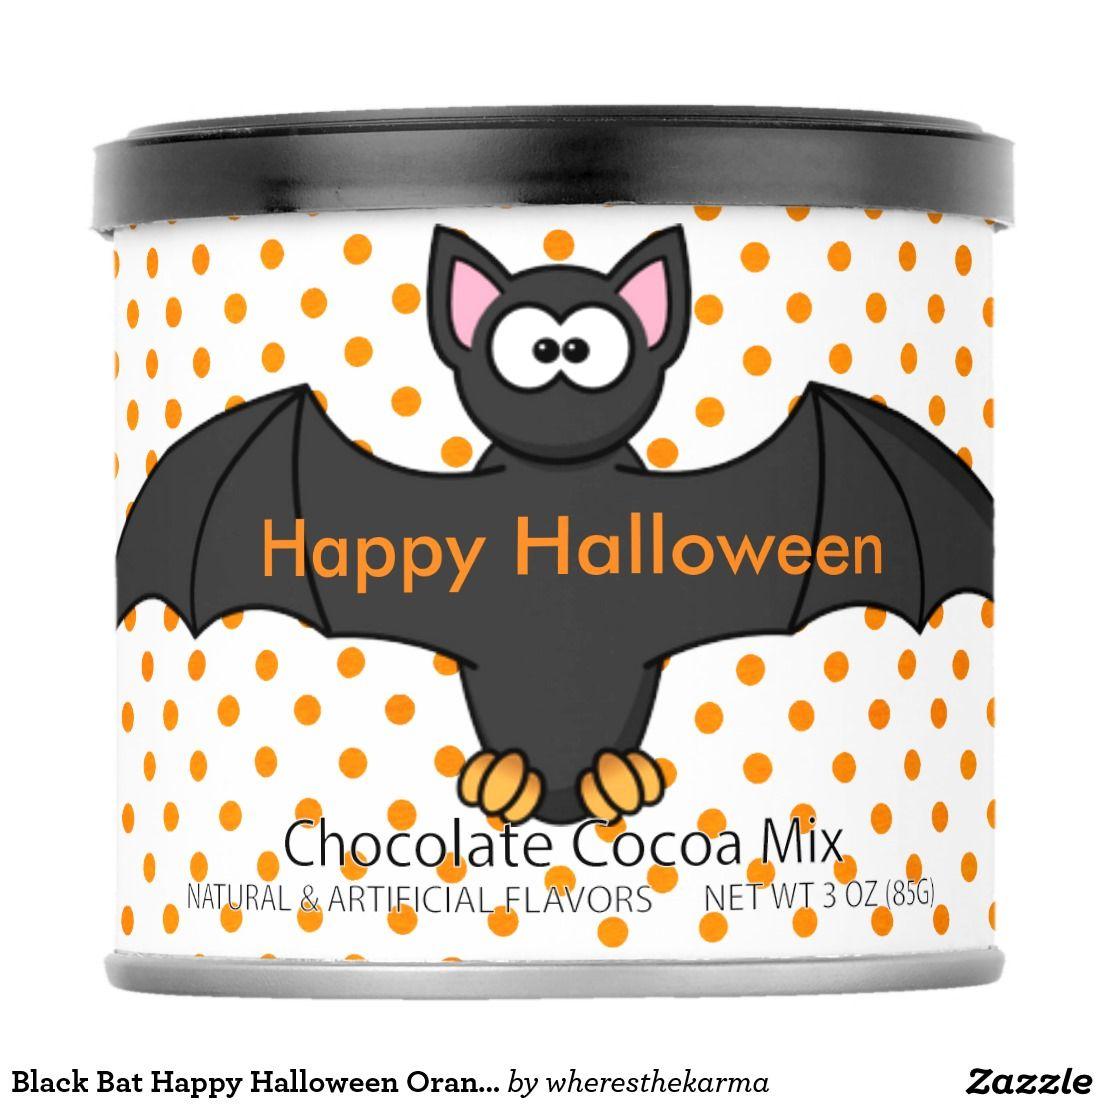 Black Bat Drink Logo - Black Bat Happy Halloween Orange Polka Dot Hot Chocolate Drink Mix